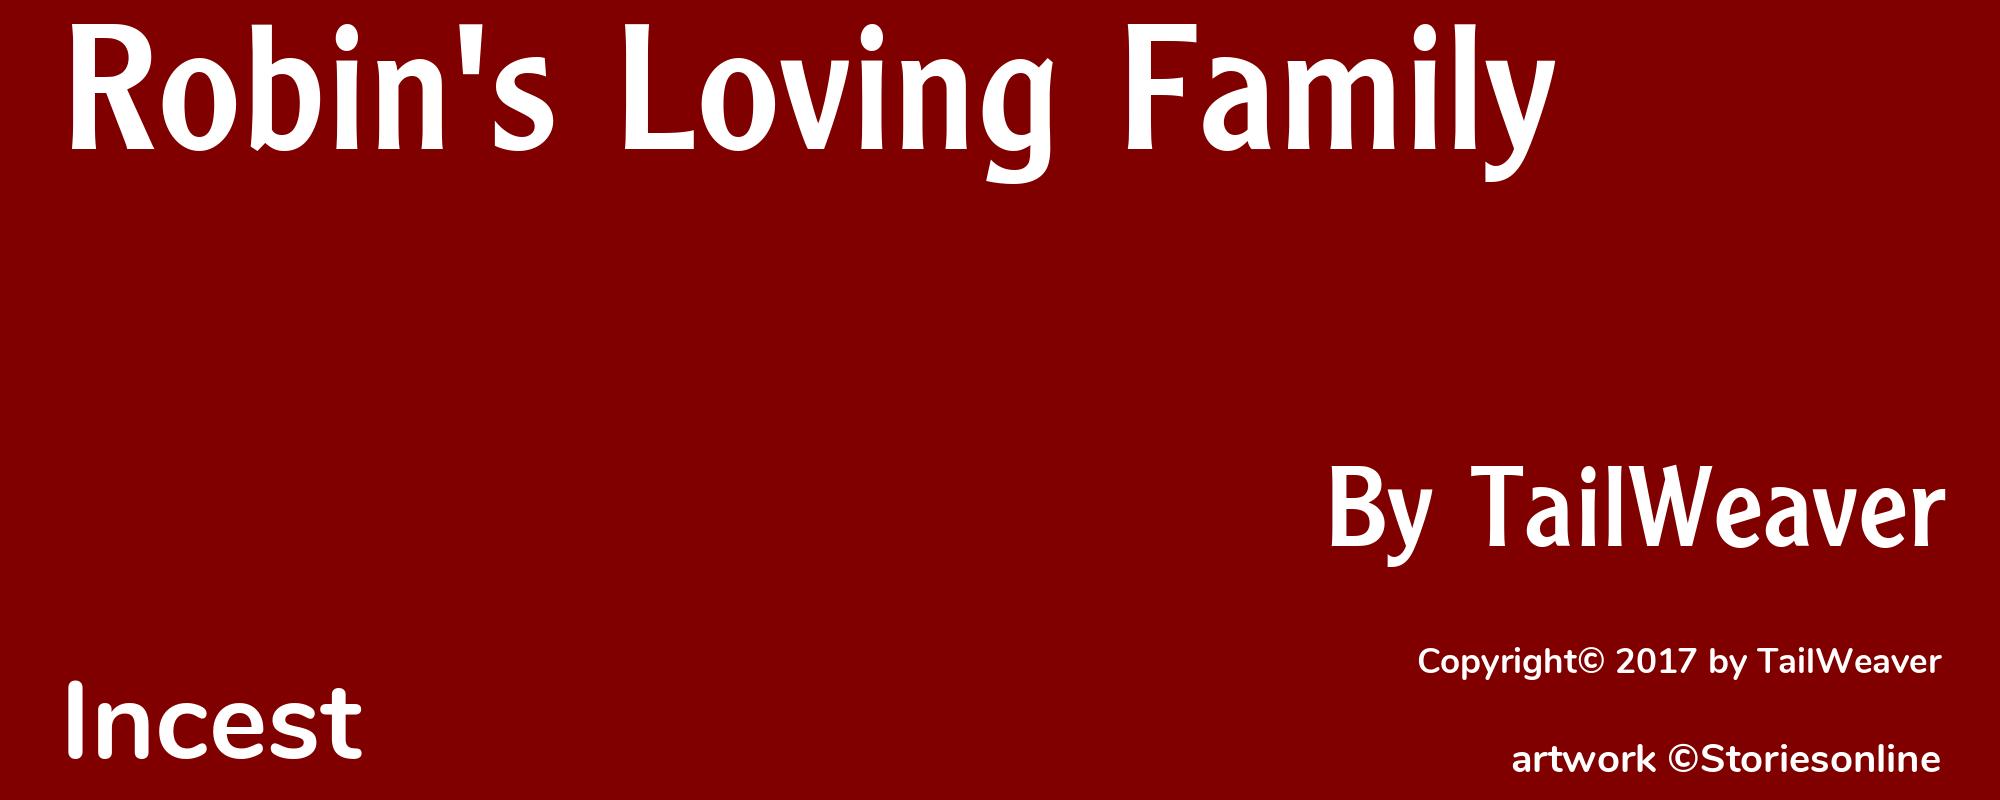 Robin's Loving Family - Cover